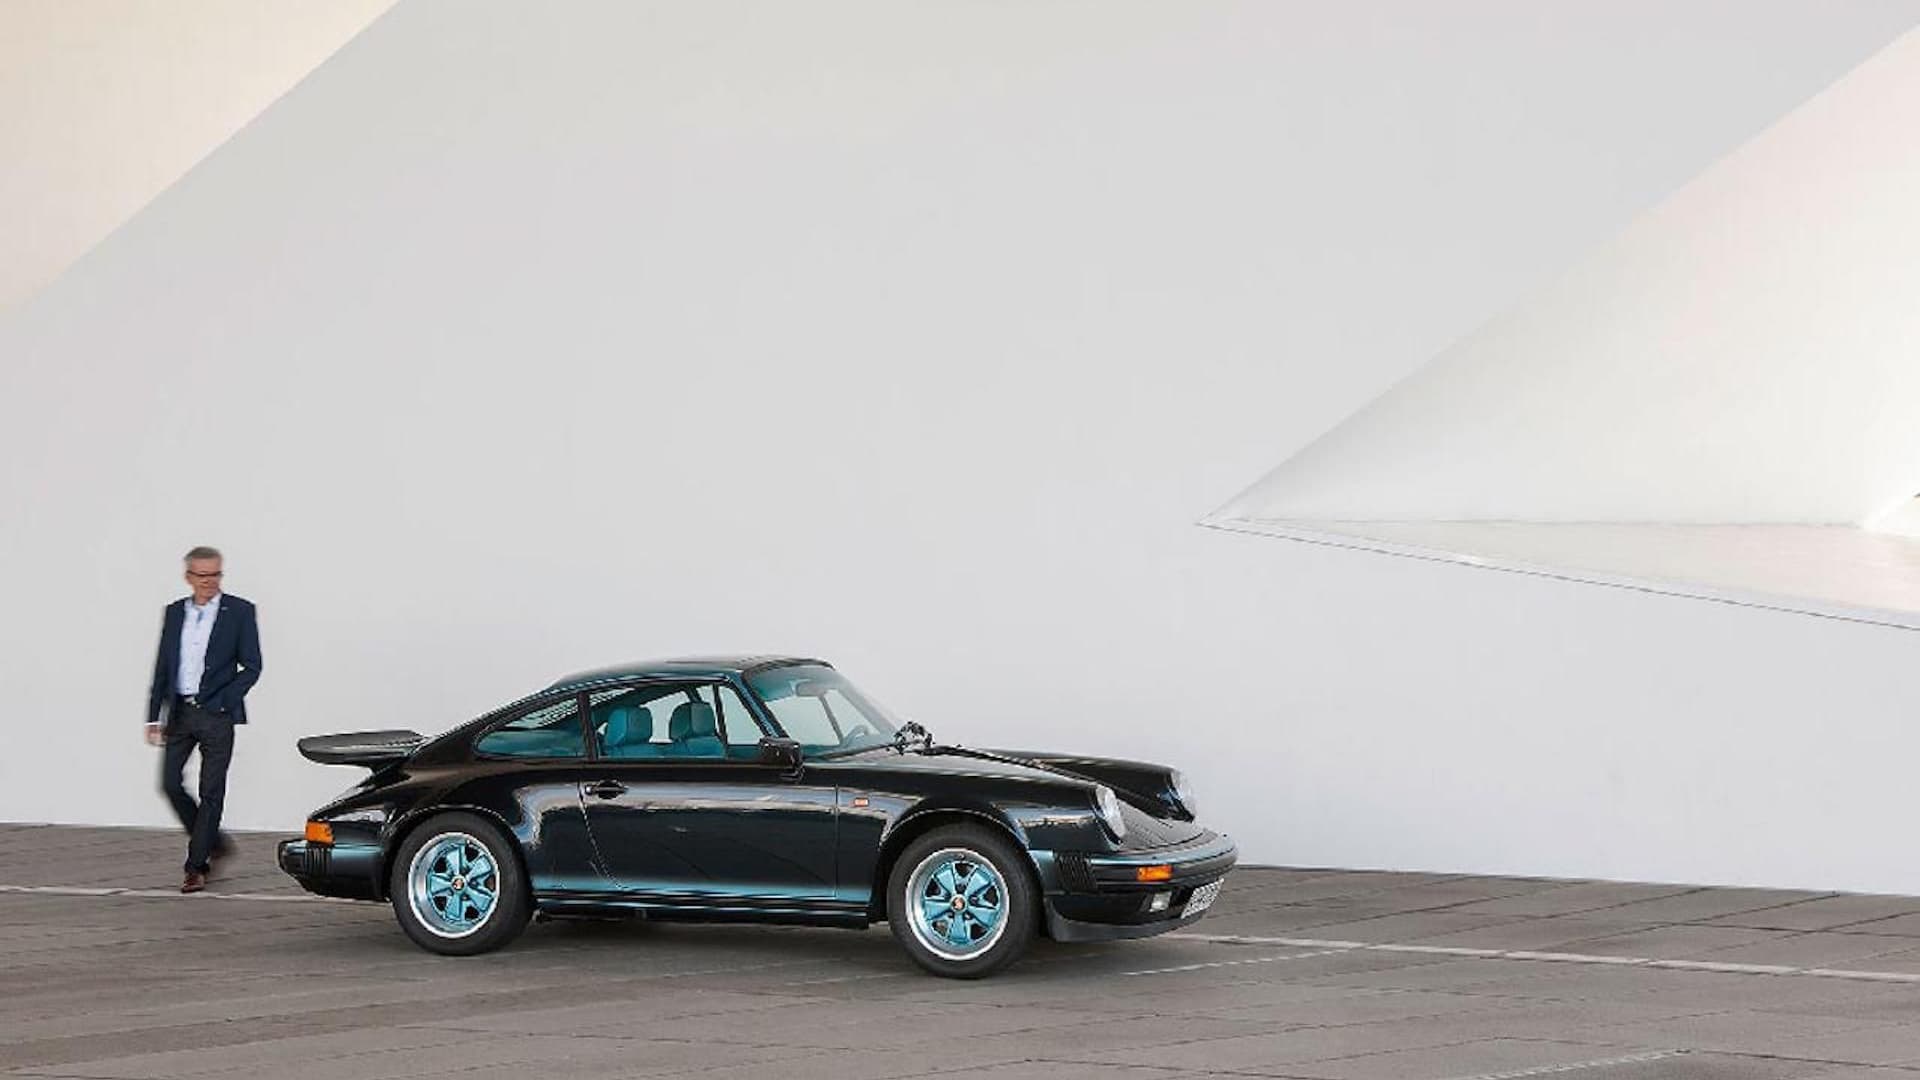 1984 Porsche 911 Carrera restored by Porsche Classic